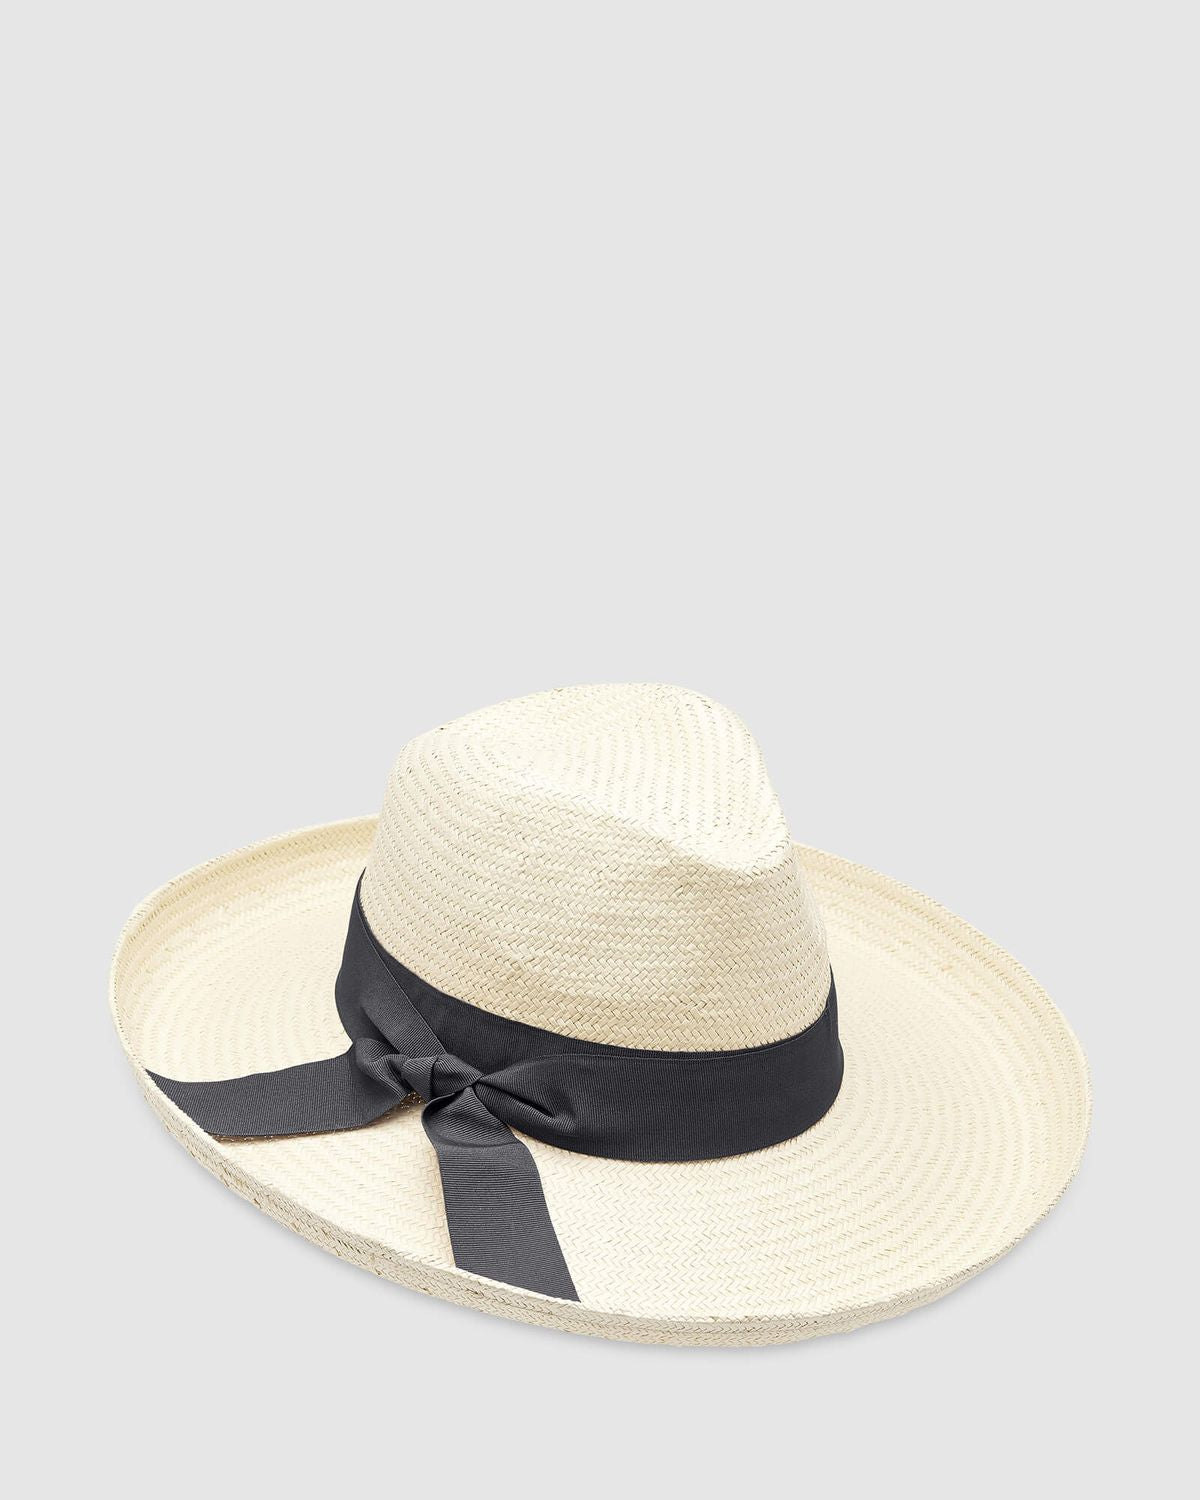 Casablanca Panama Hat - Ivory